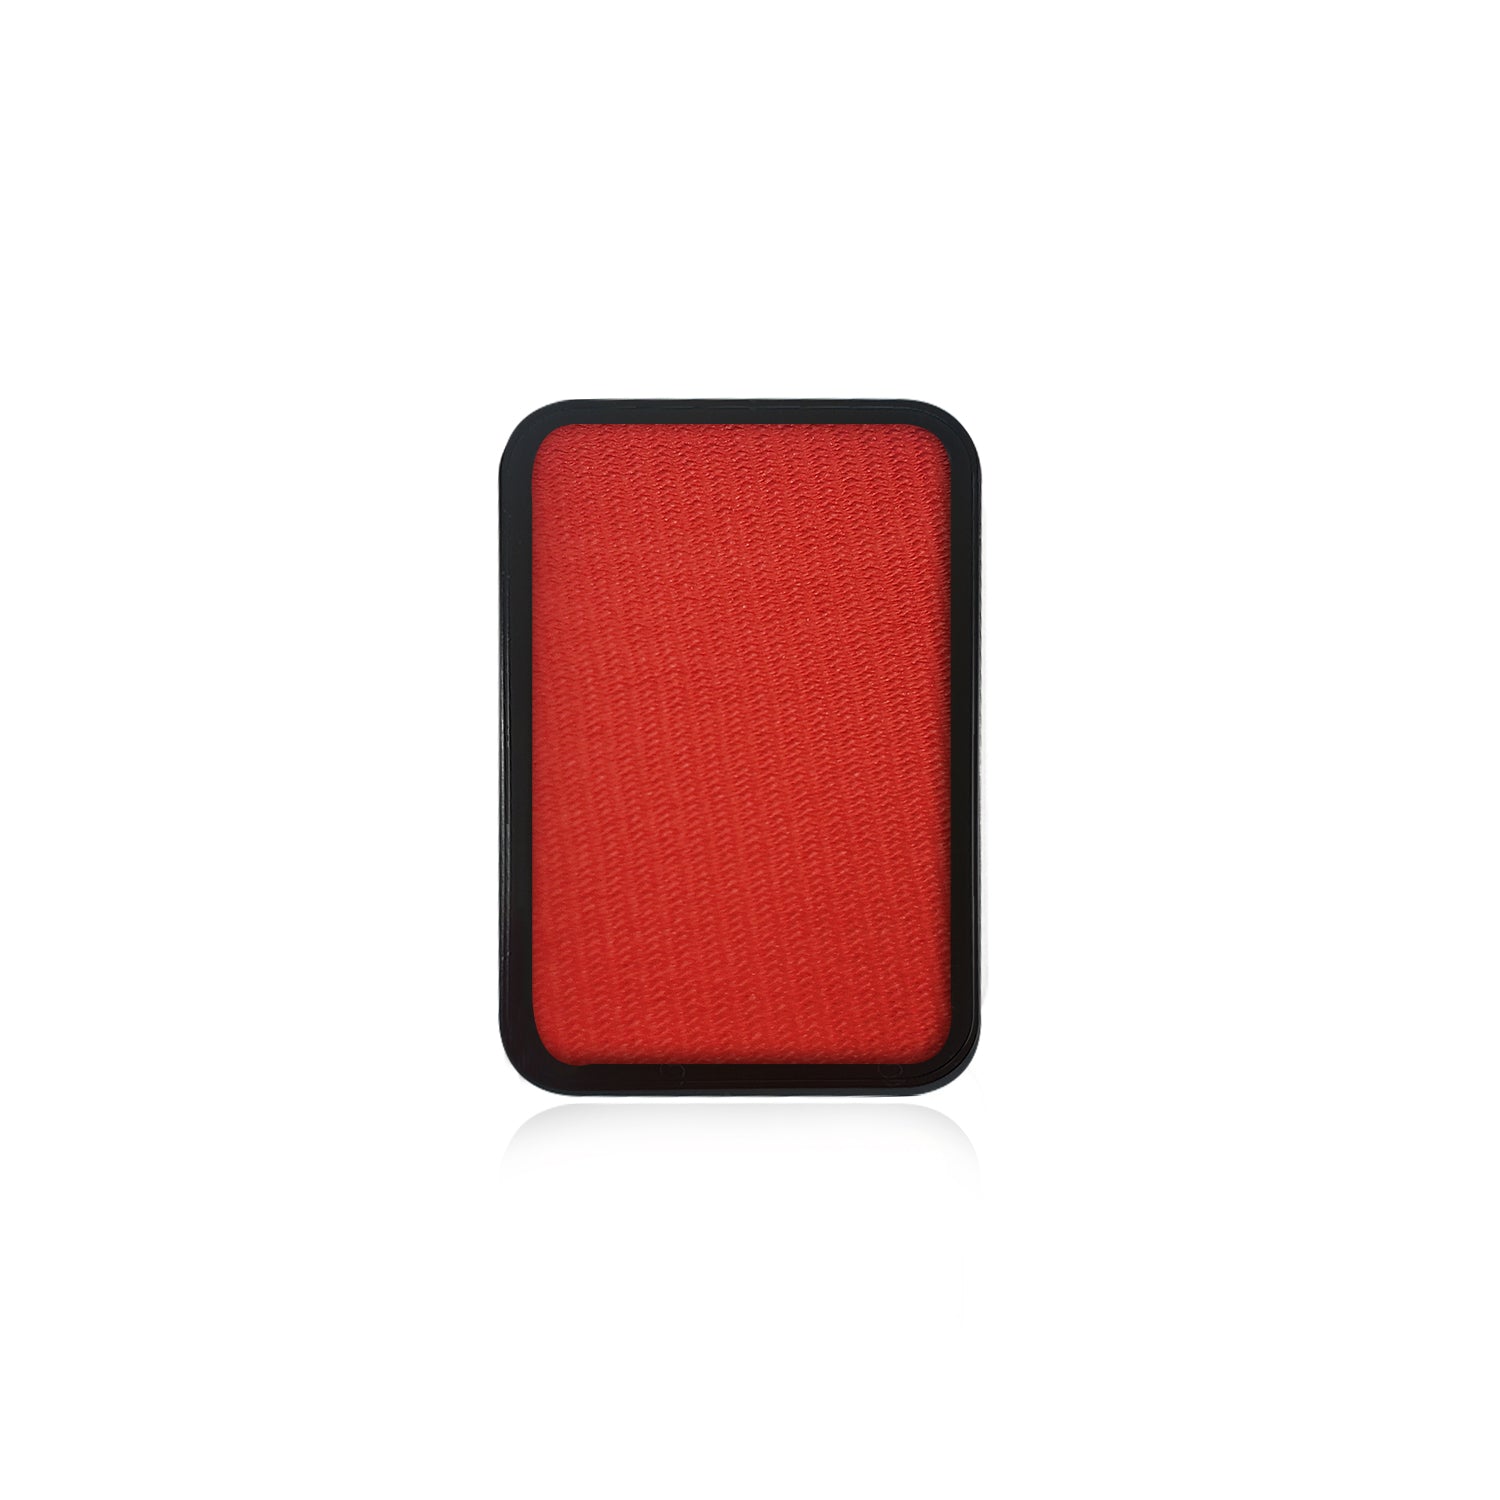 Kraze Face Paint Palette Refill - Red (0.35 oz/10 gm)